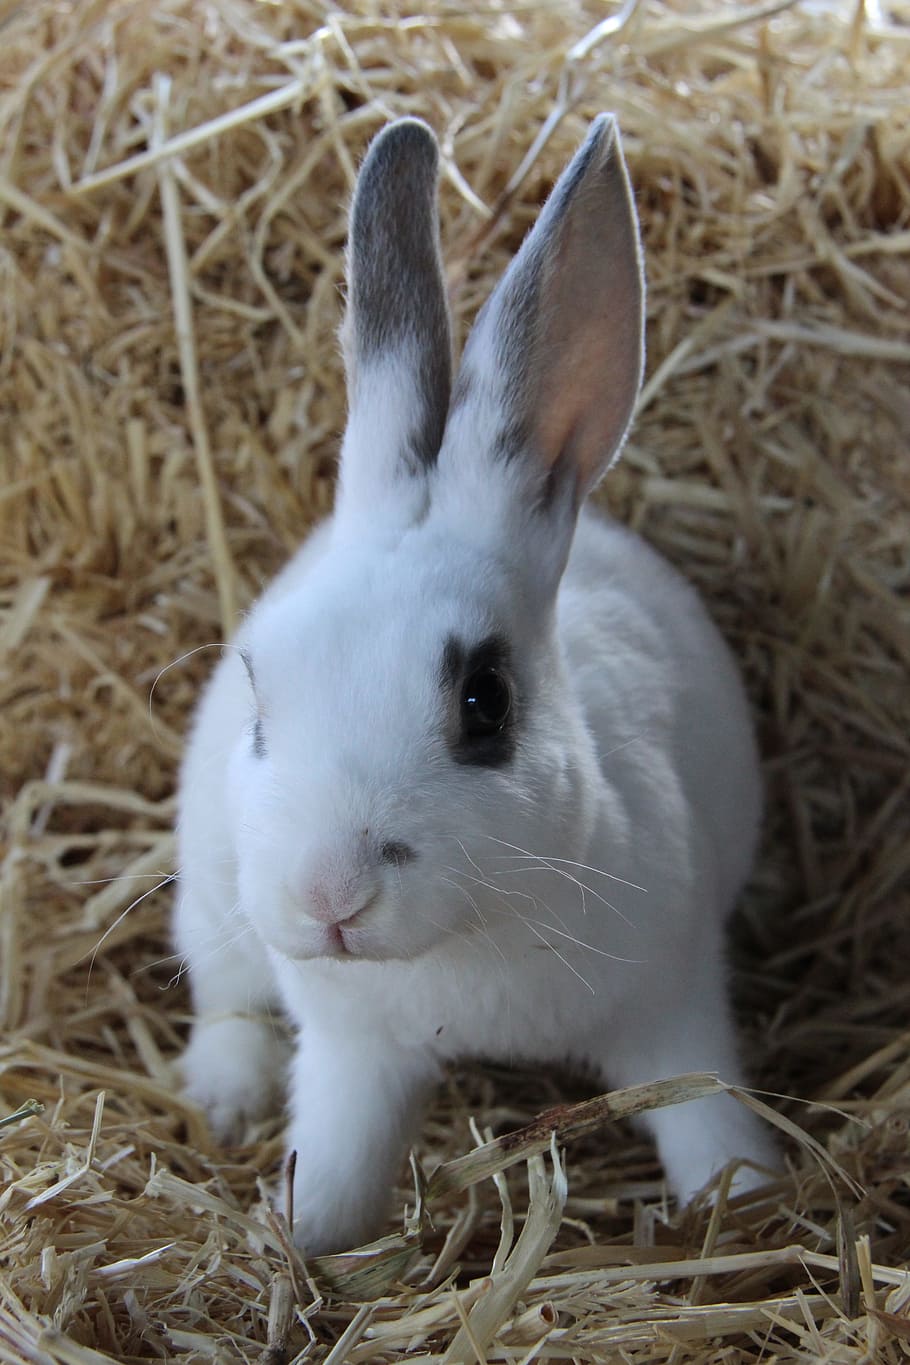 rabbit, cute, animal, bunny, reynella rabbits, animal themes, mammal, vertebrate, pets, hay